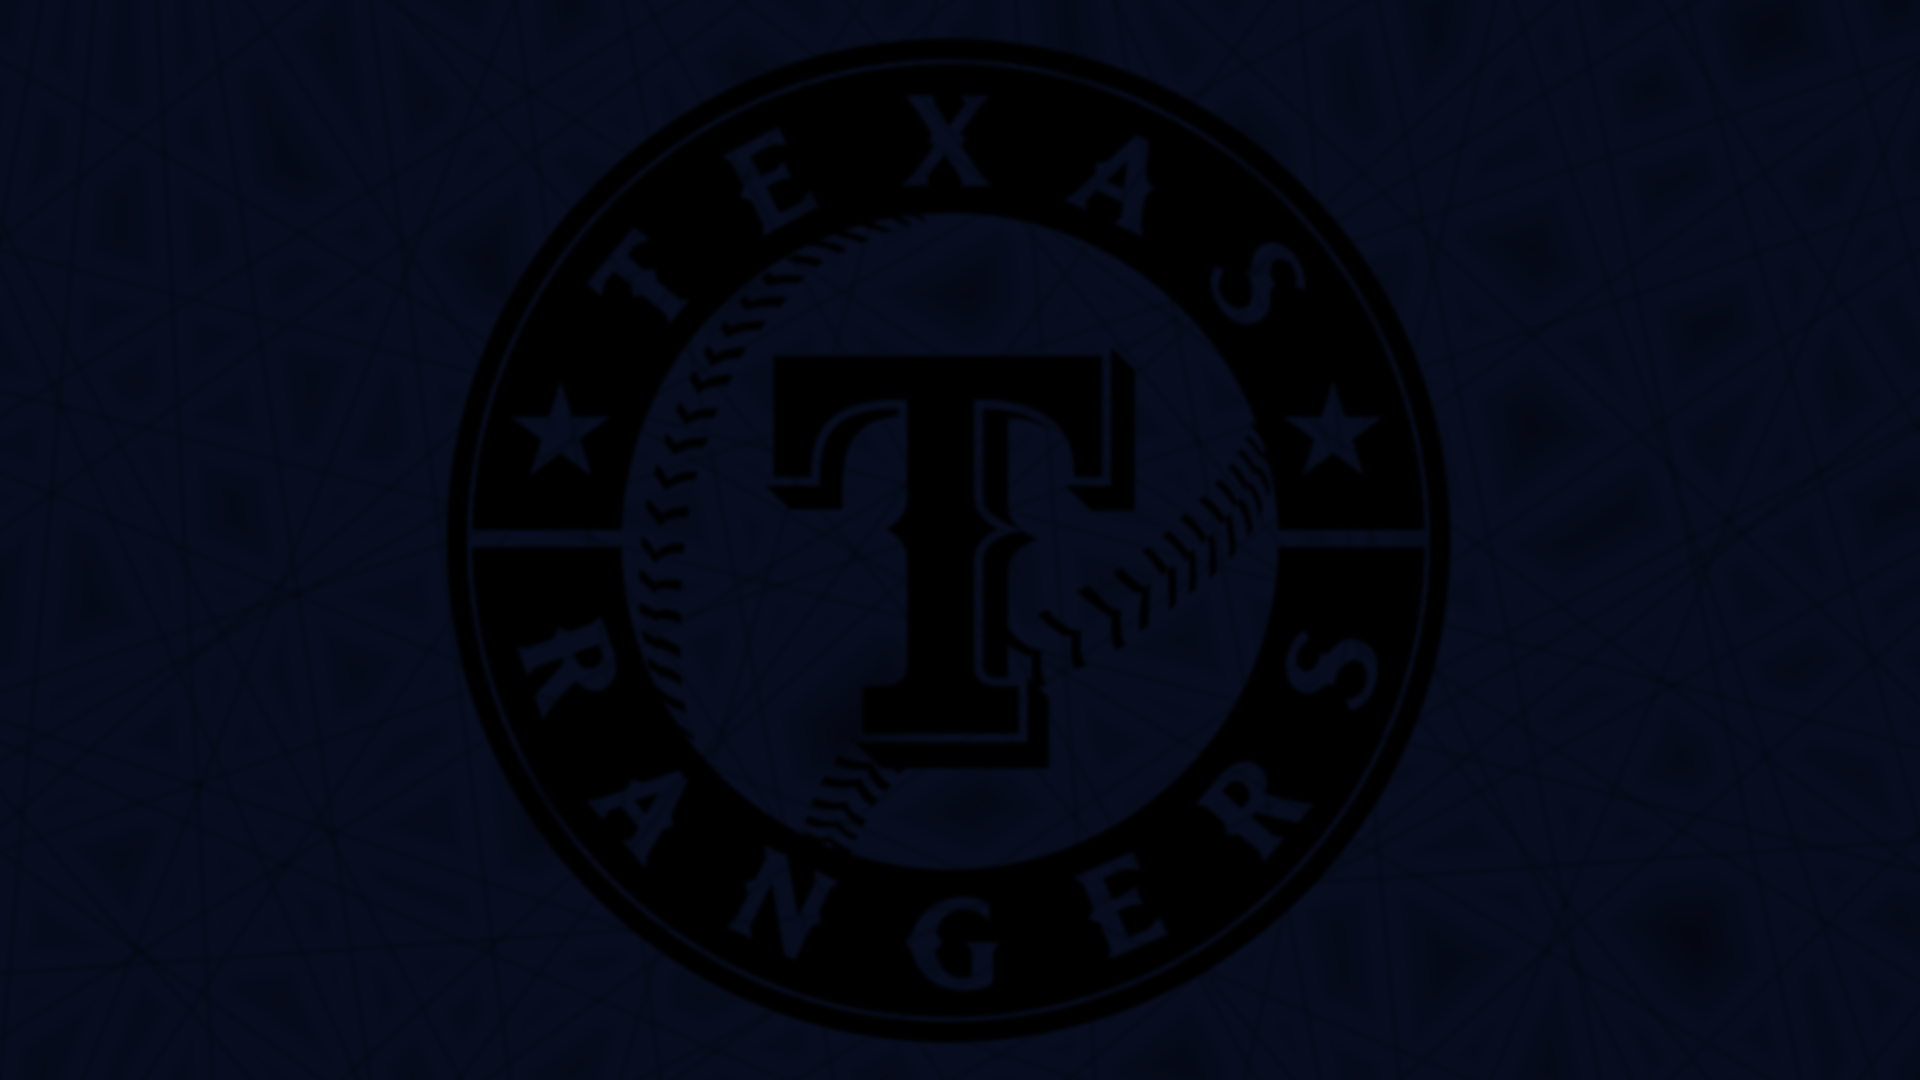 Texas Rangers Full HD Widescreen wallpapers for desktop